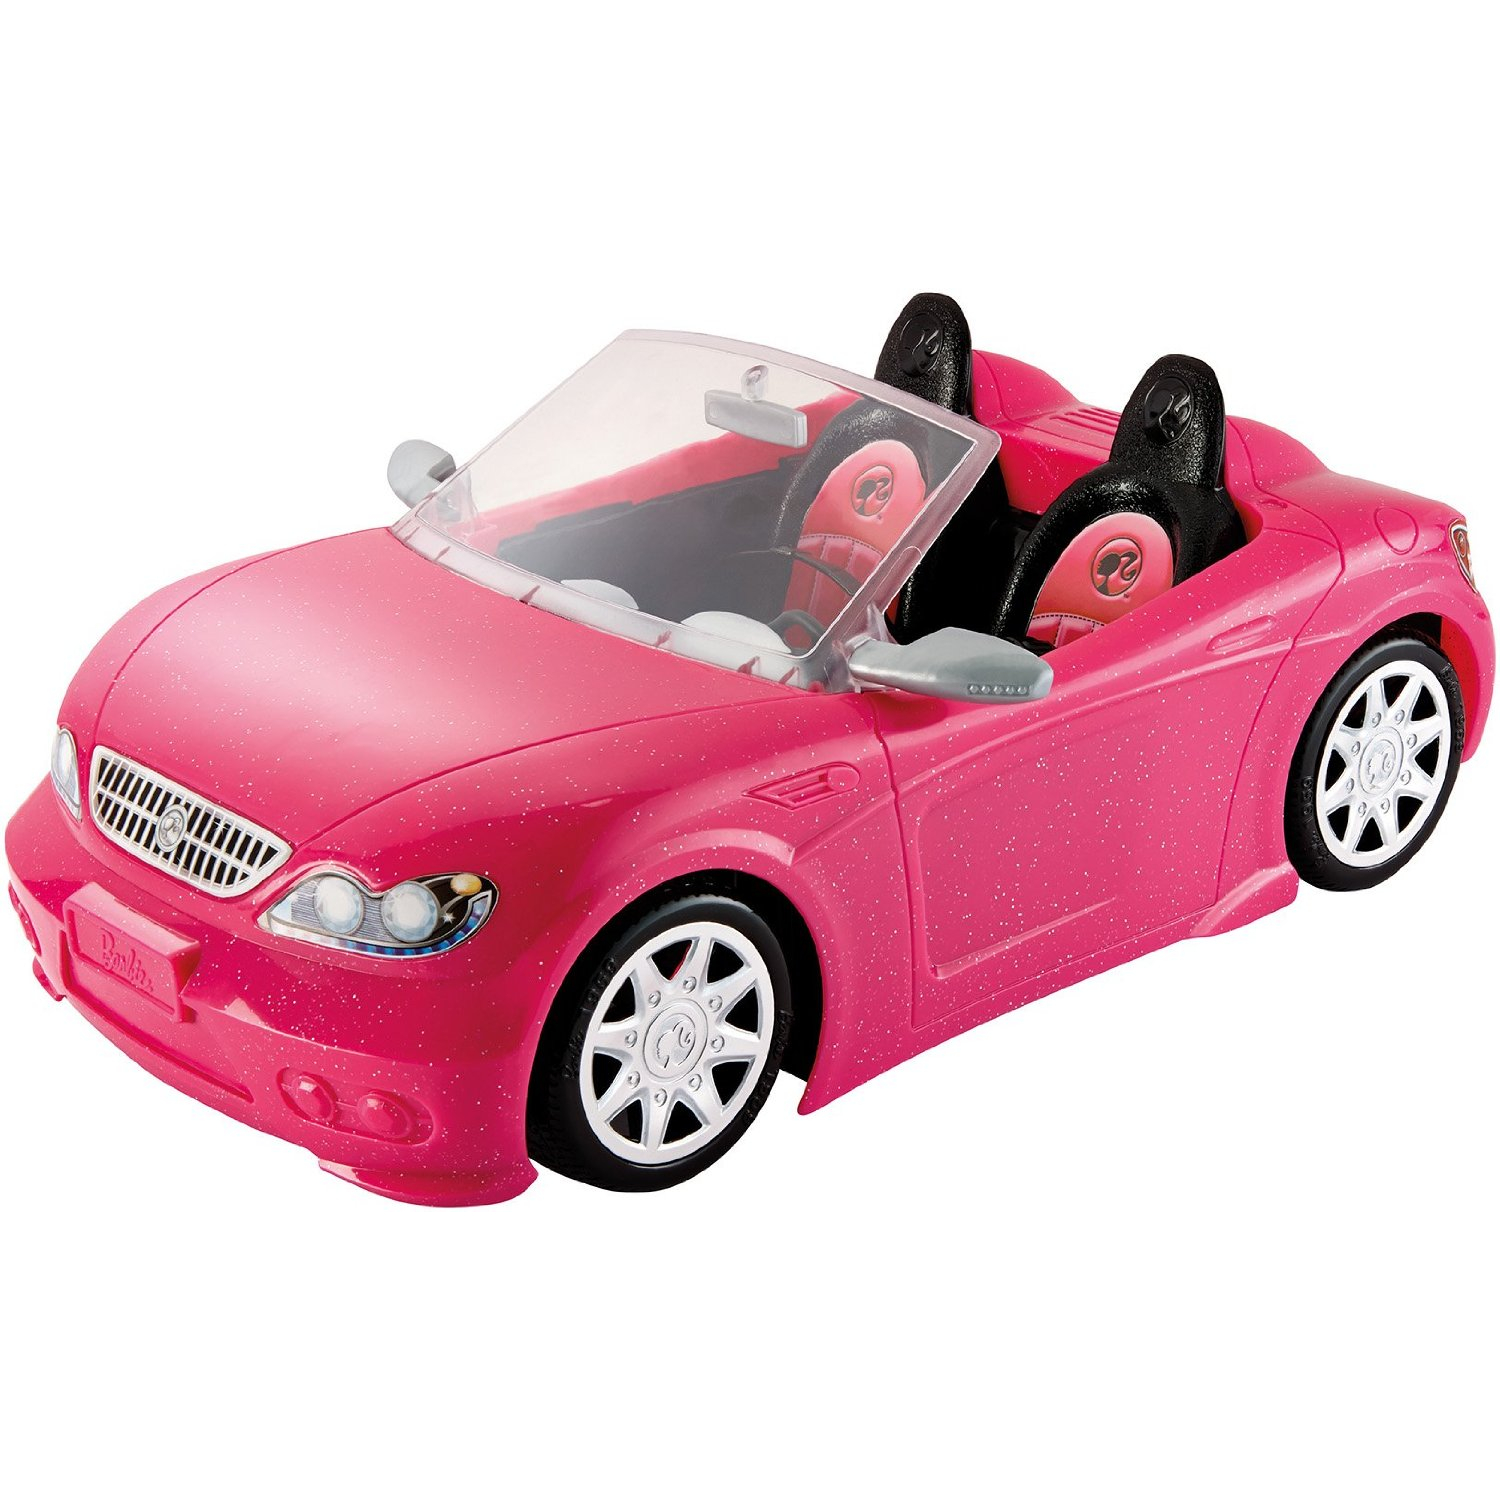 Машина для кукол купить. Набор Barbie гламурный кабриолет, djr55. Машина кабриолет для куклы Барби. Кукла Барби розовый кабриолет. Кабриолет Барби Нордпласт.